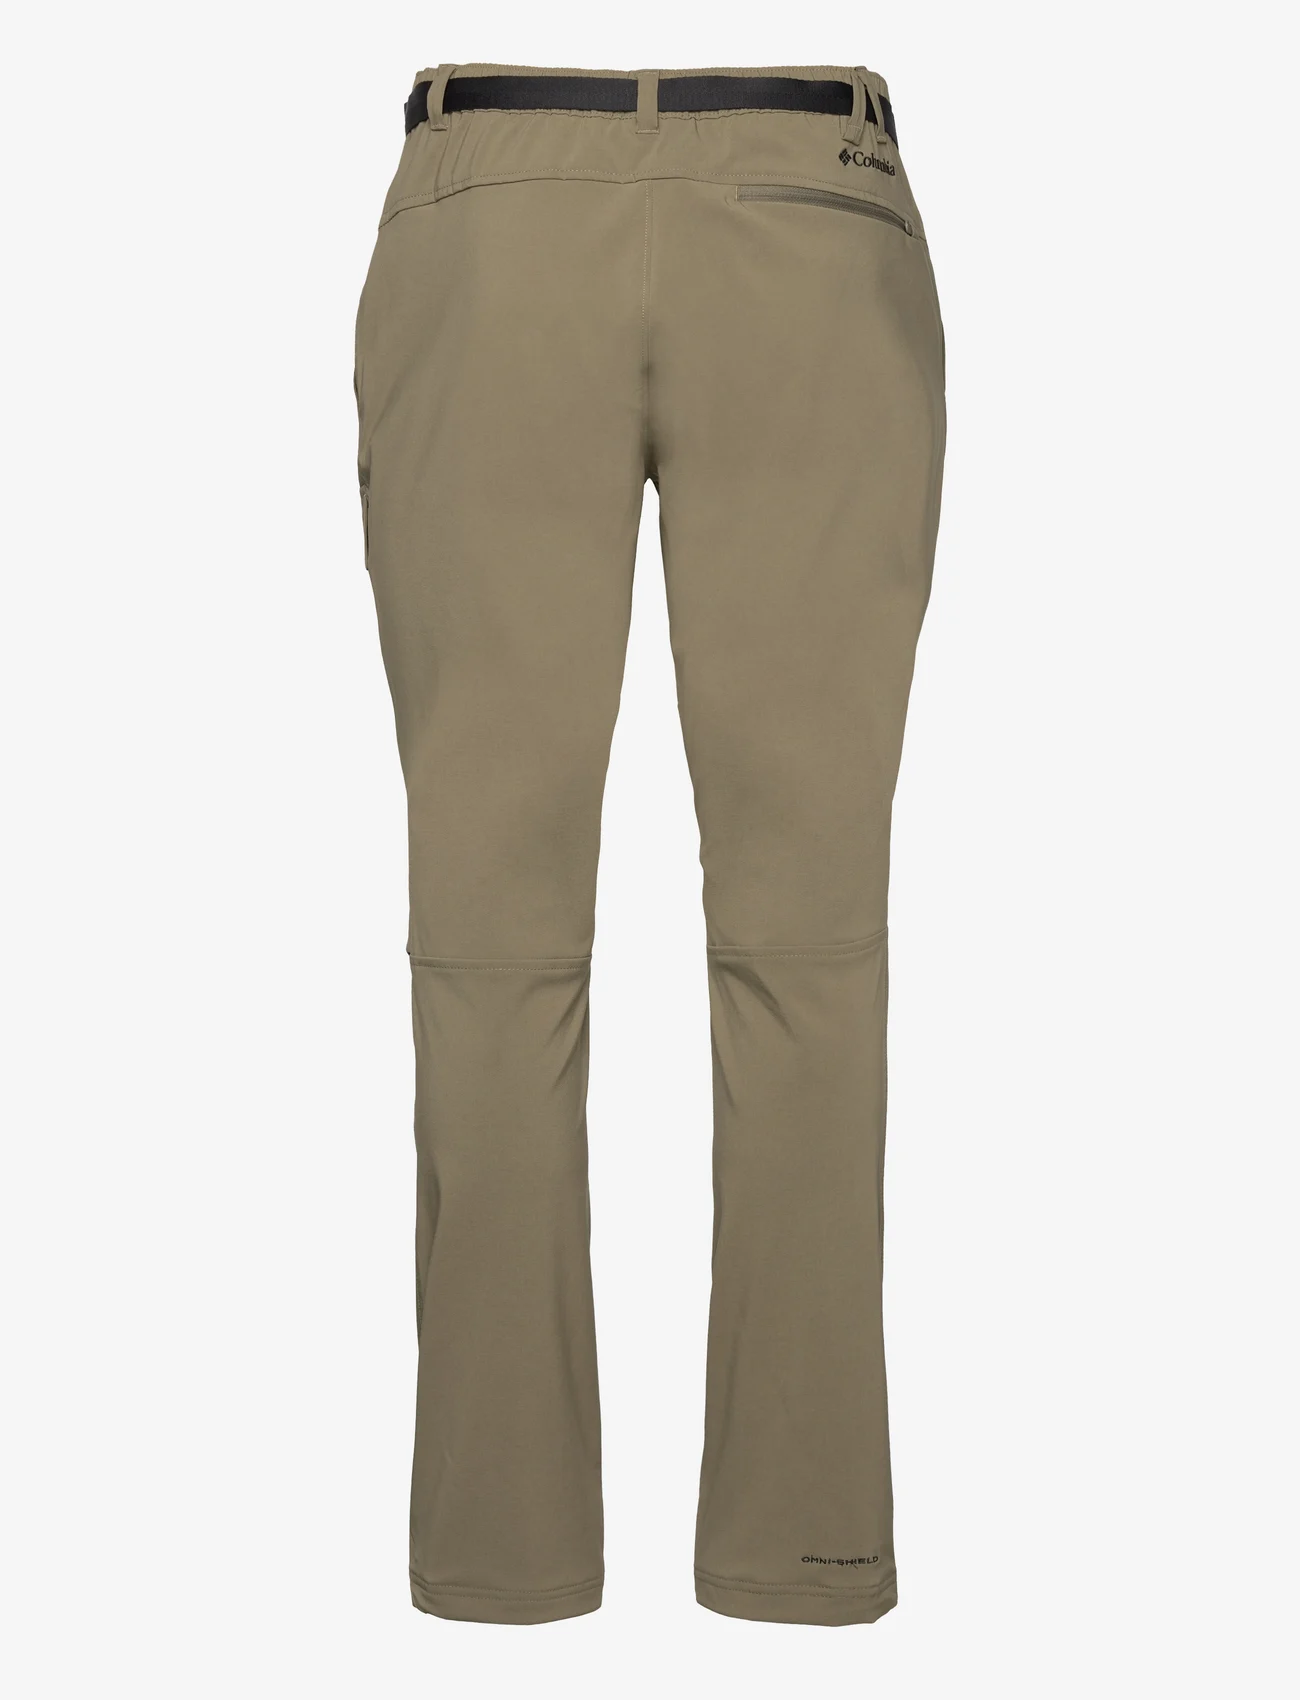 Columbia Sportswear - Maxtrail Midweight Warm Pant - outdoorhosen - stone green - 1